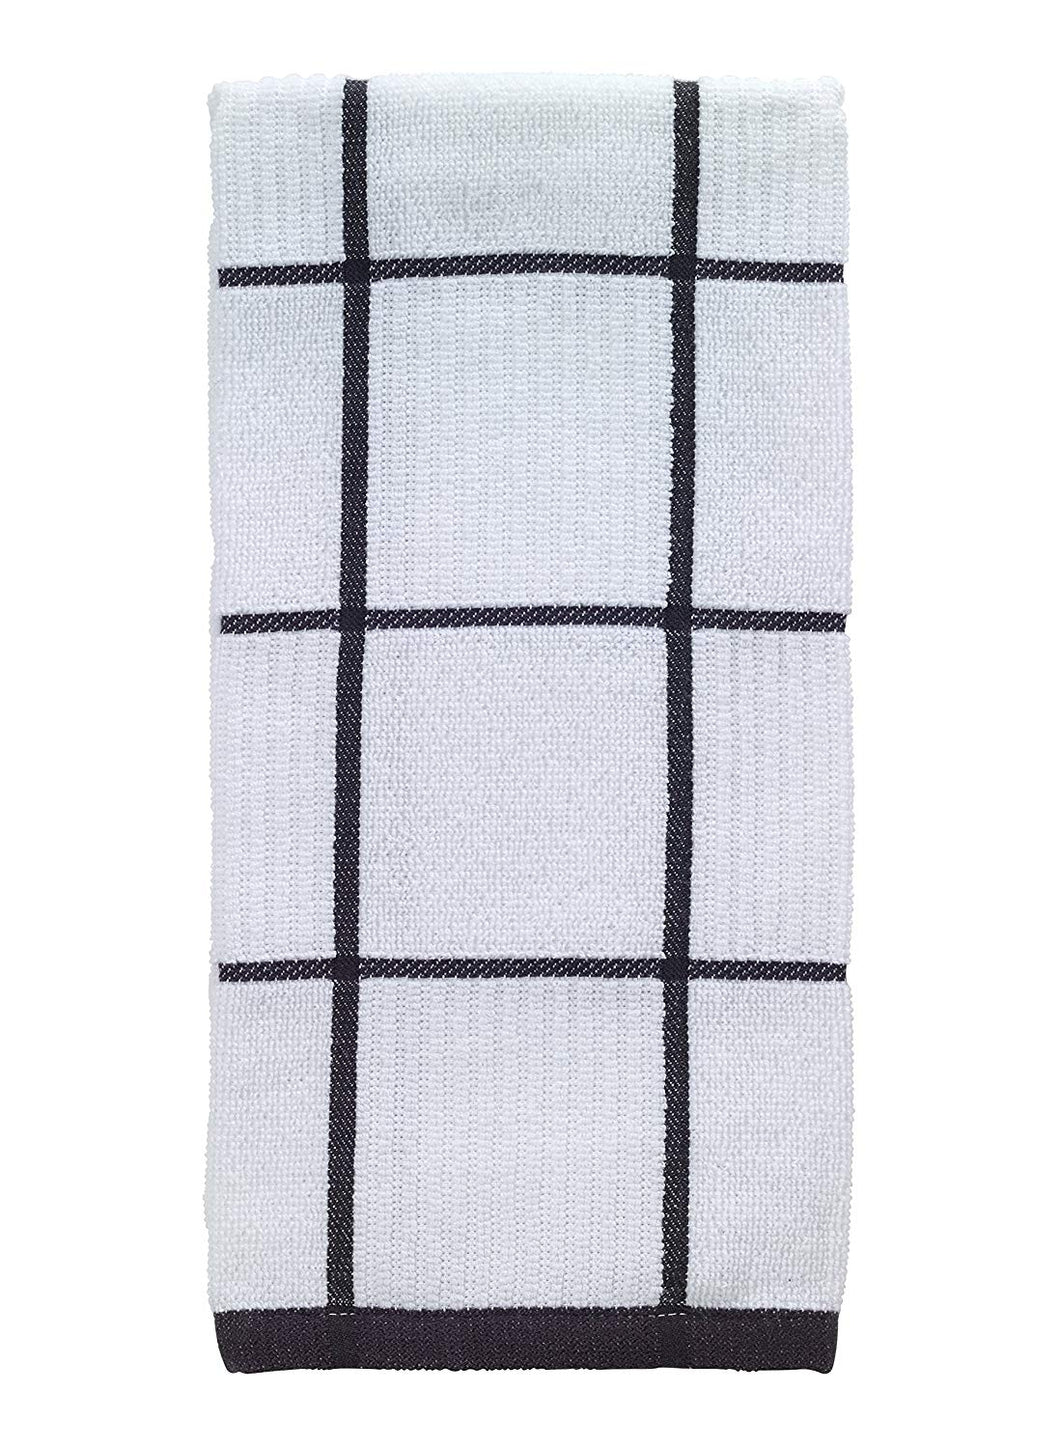 T-fal Textiles 10153 100-Percent Cotton Checked Parquet Kitchen Dish Towel, Charcoal, Single